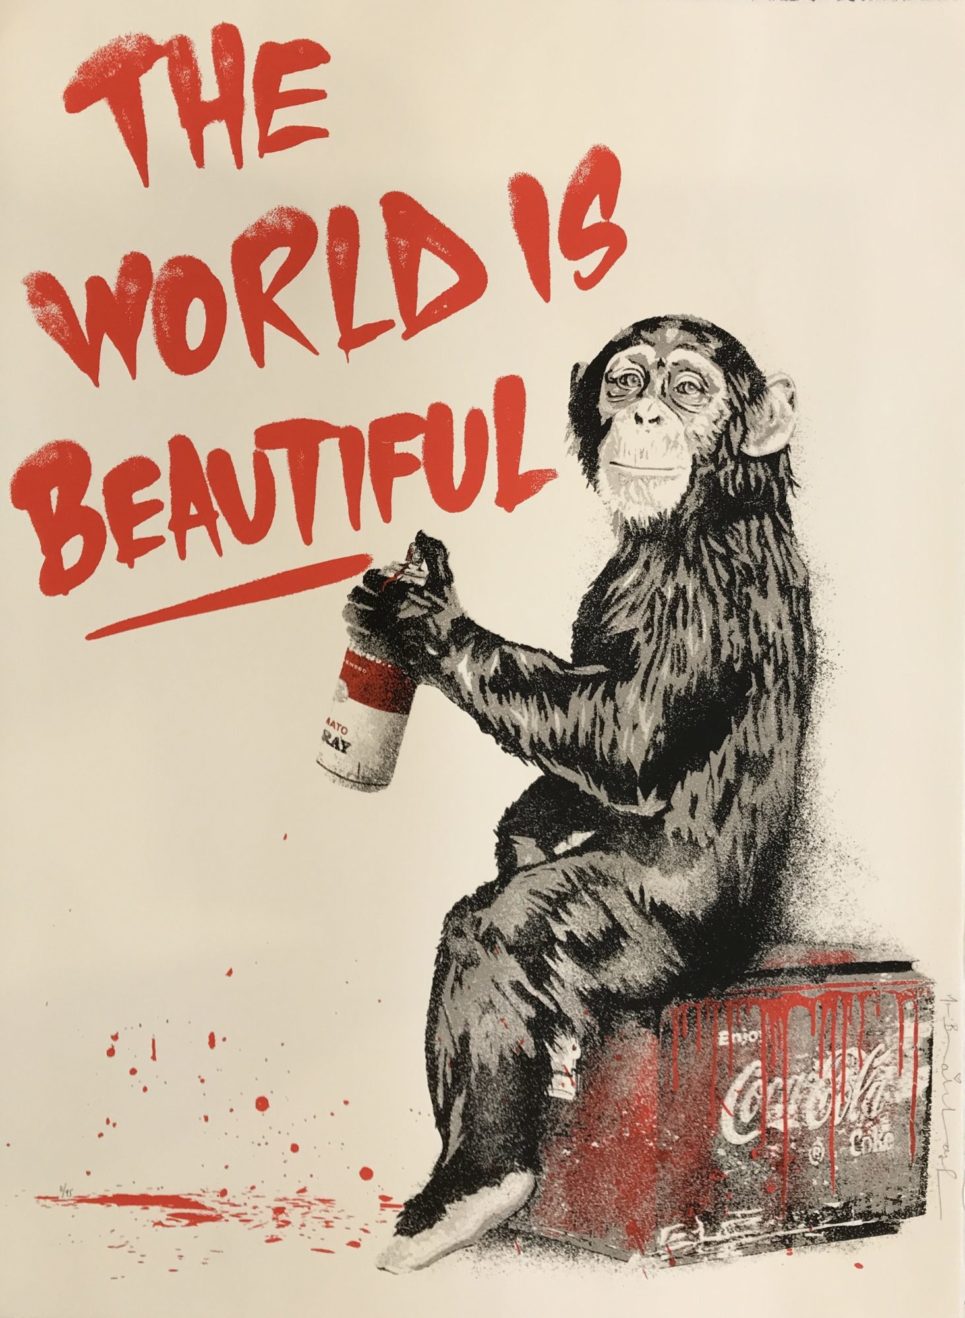 Mr. Brainwash - The World is Beautiful (Red)